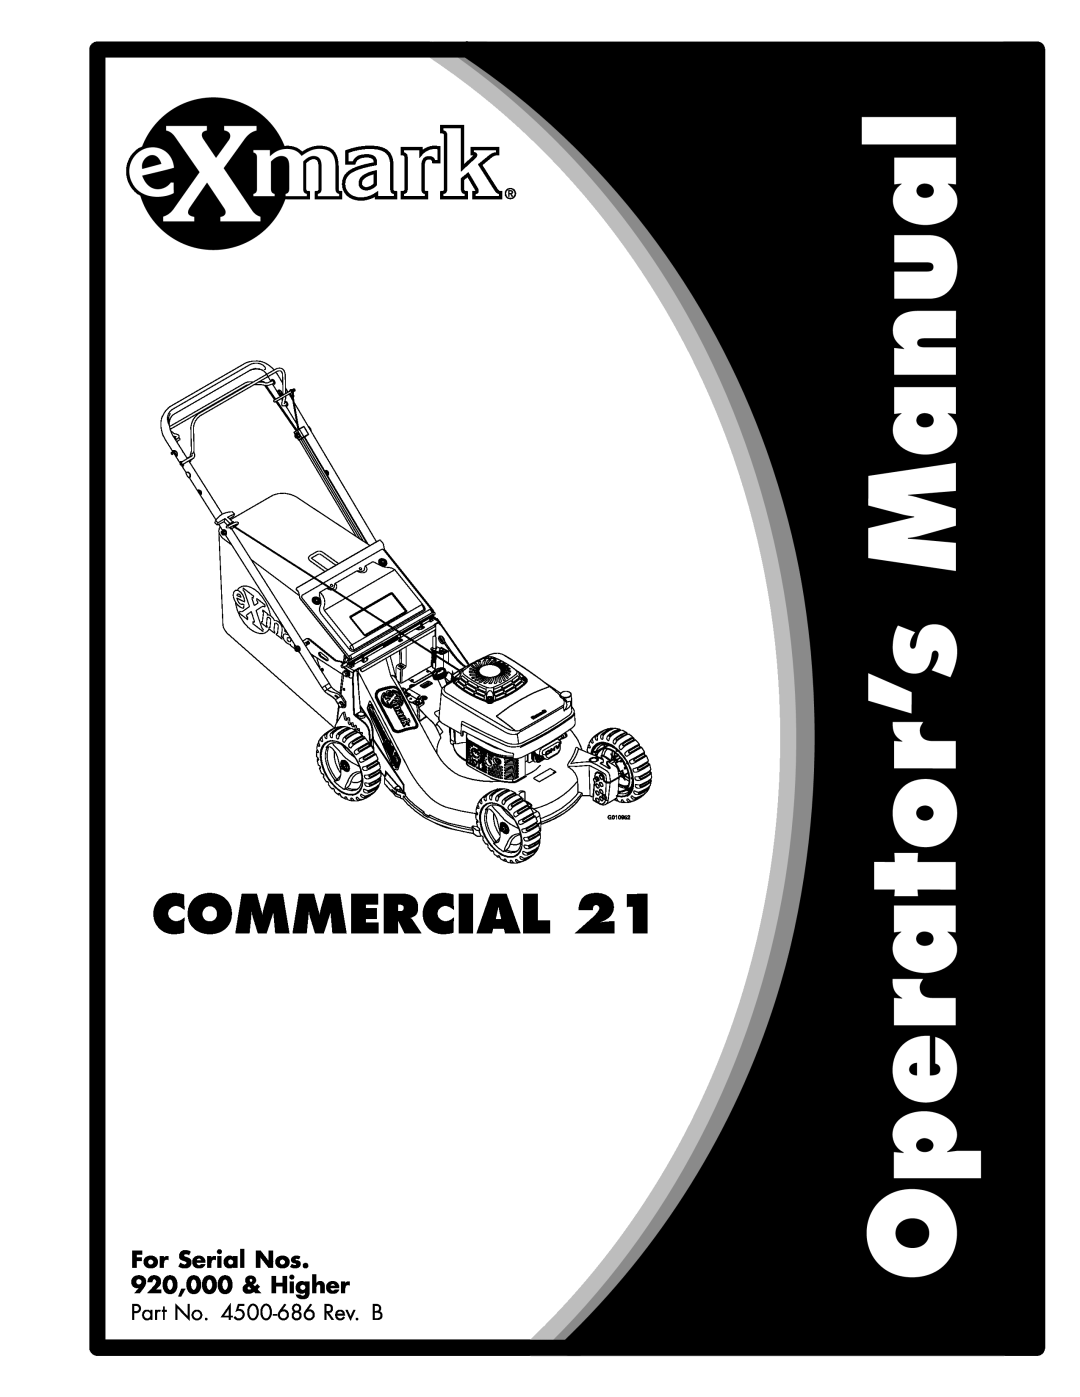 Exmark 4500-686 Rev. B manual Commercial, For Serial Nos 920,000 & Higher 